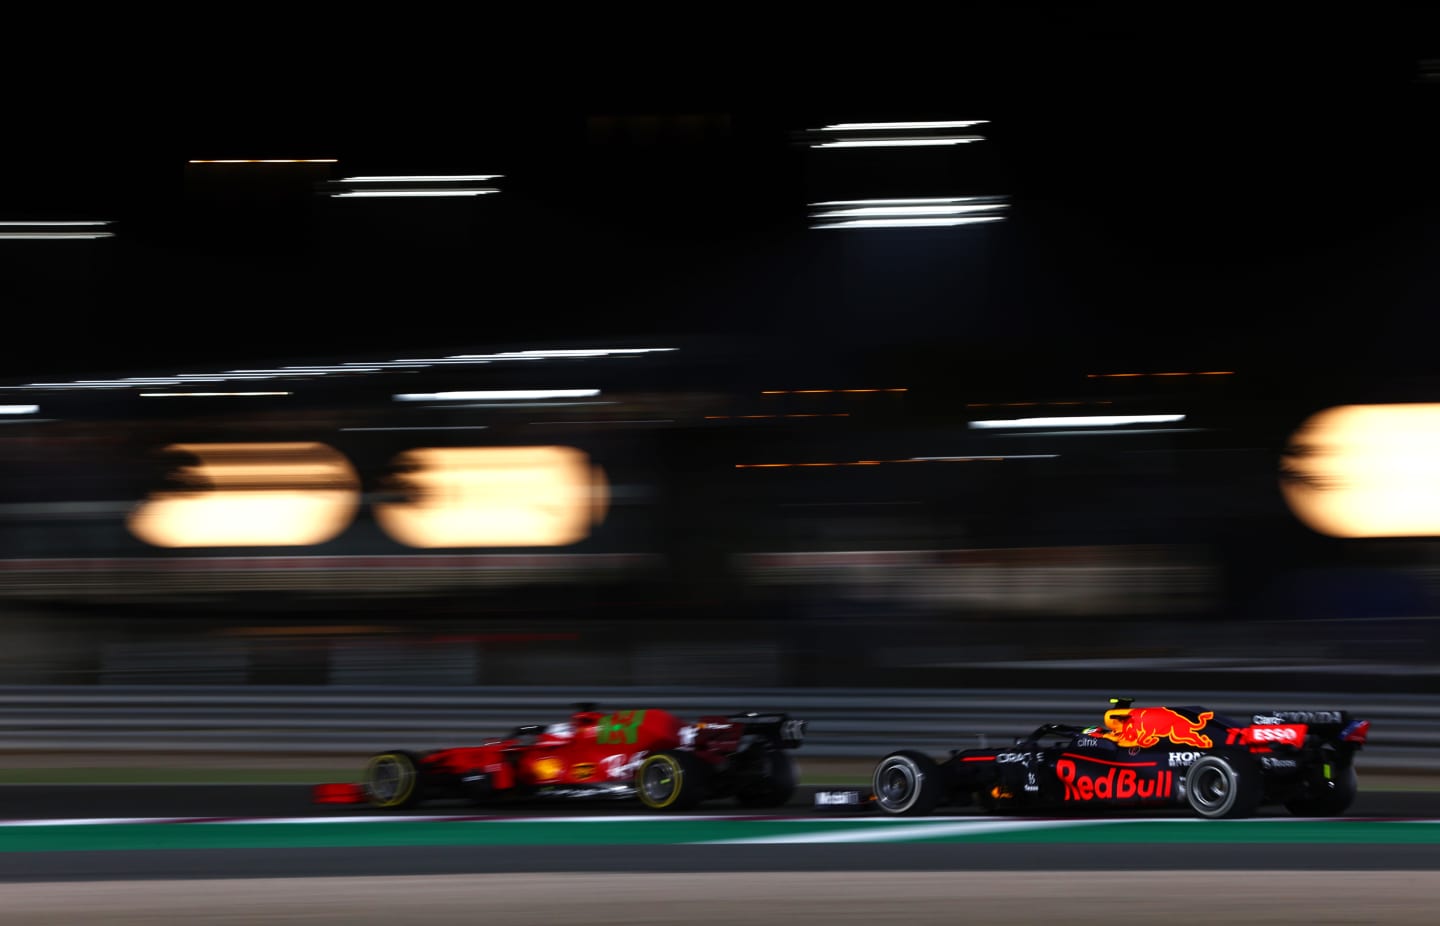 DOHA, QATAR - NOVEMBER 21: Charles Leclerc of Monaco driving the (16) Scuderia Ferrari SF21 leads